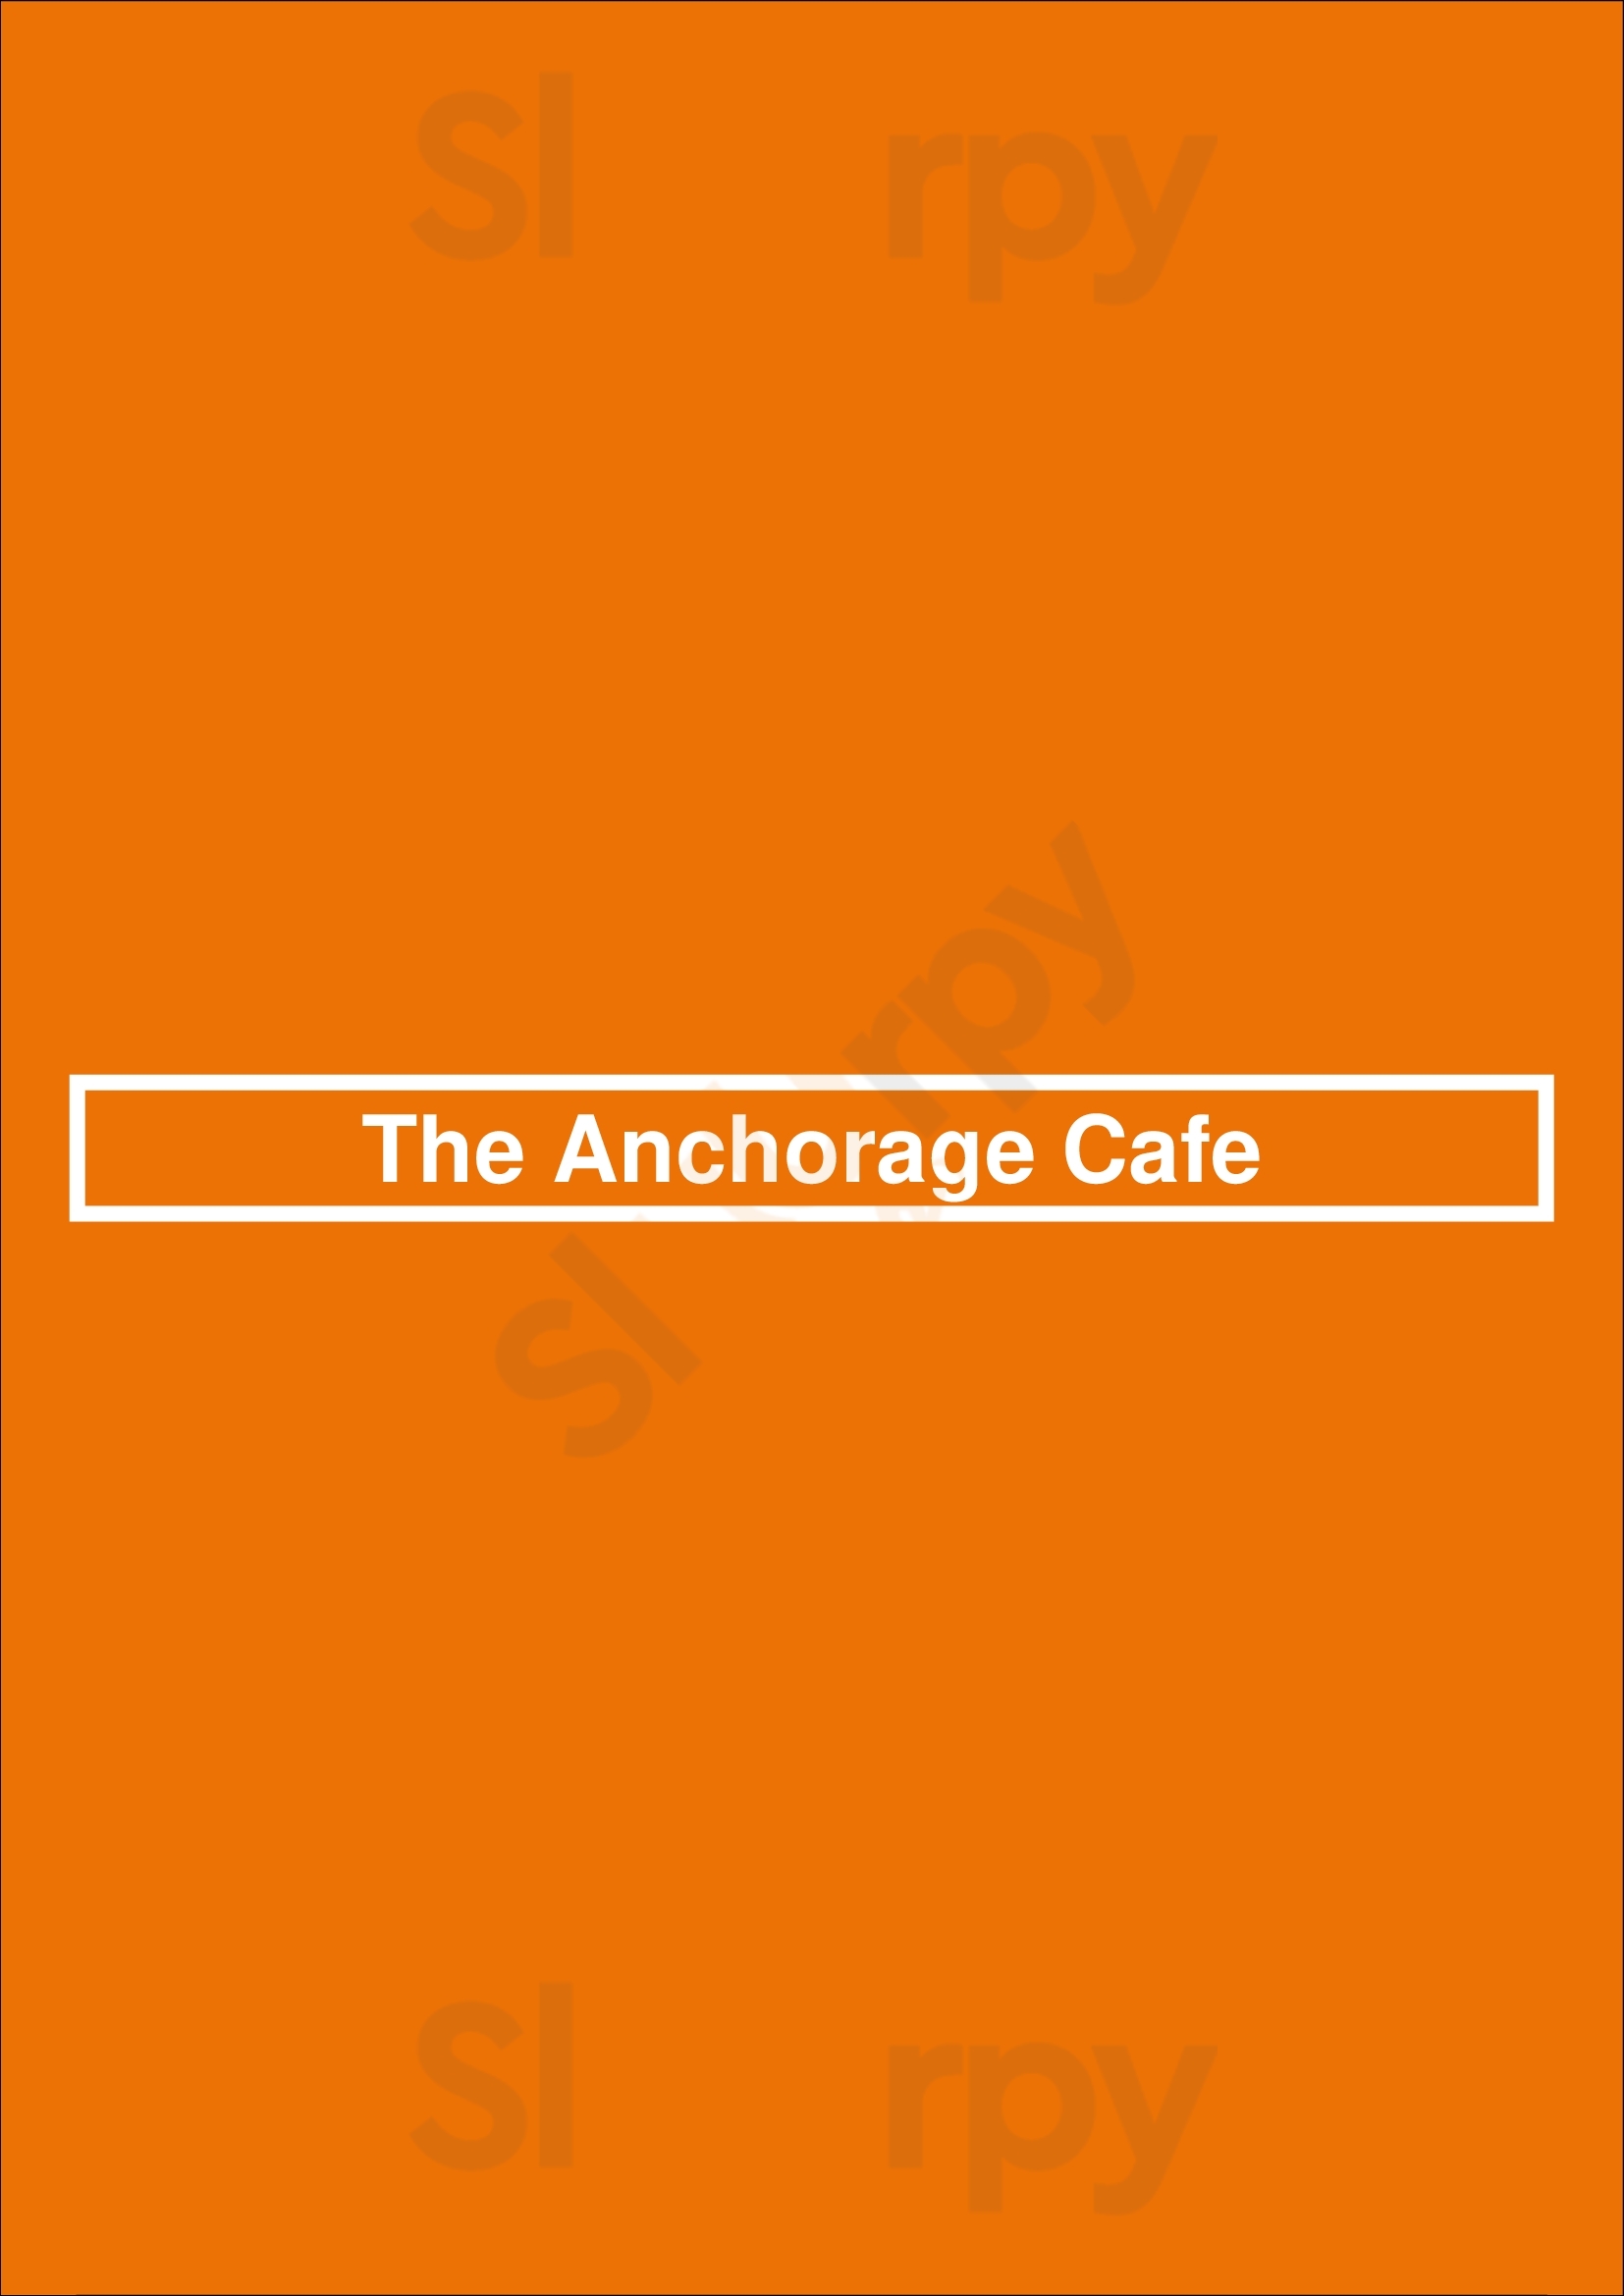 The Anchorage Cafe Gold Coast Menu - 1